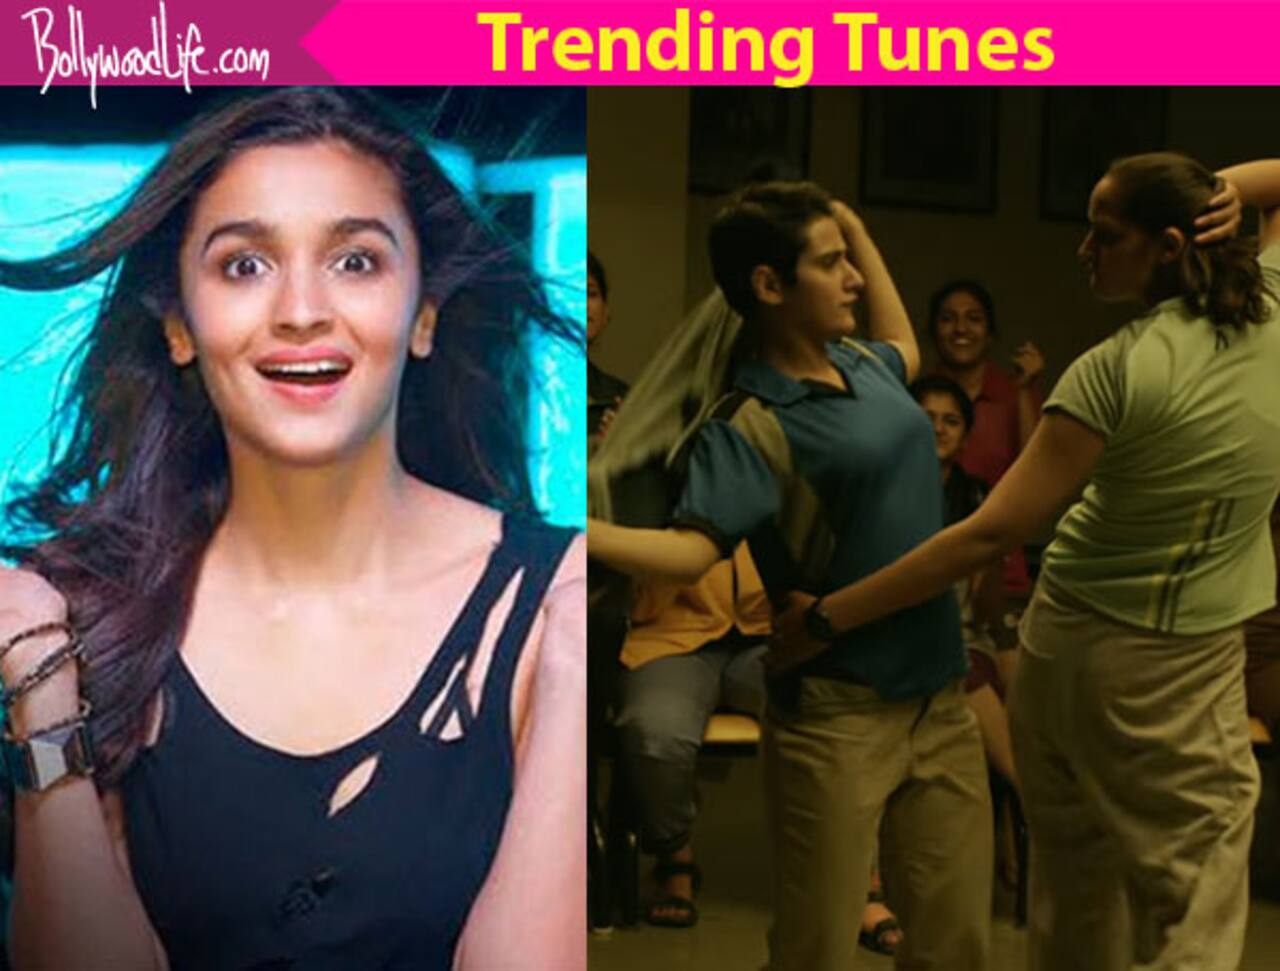 Trending Tunes: Alia Bhatt's Love You Zindagi Club Mix and Aamir Khan's Gilehriyaan are a hit this week